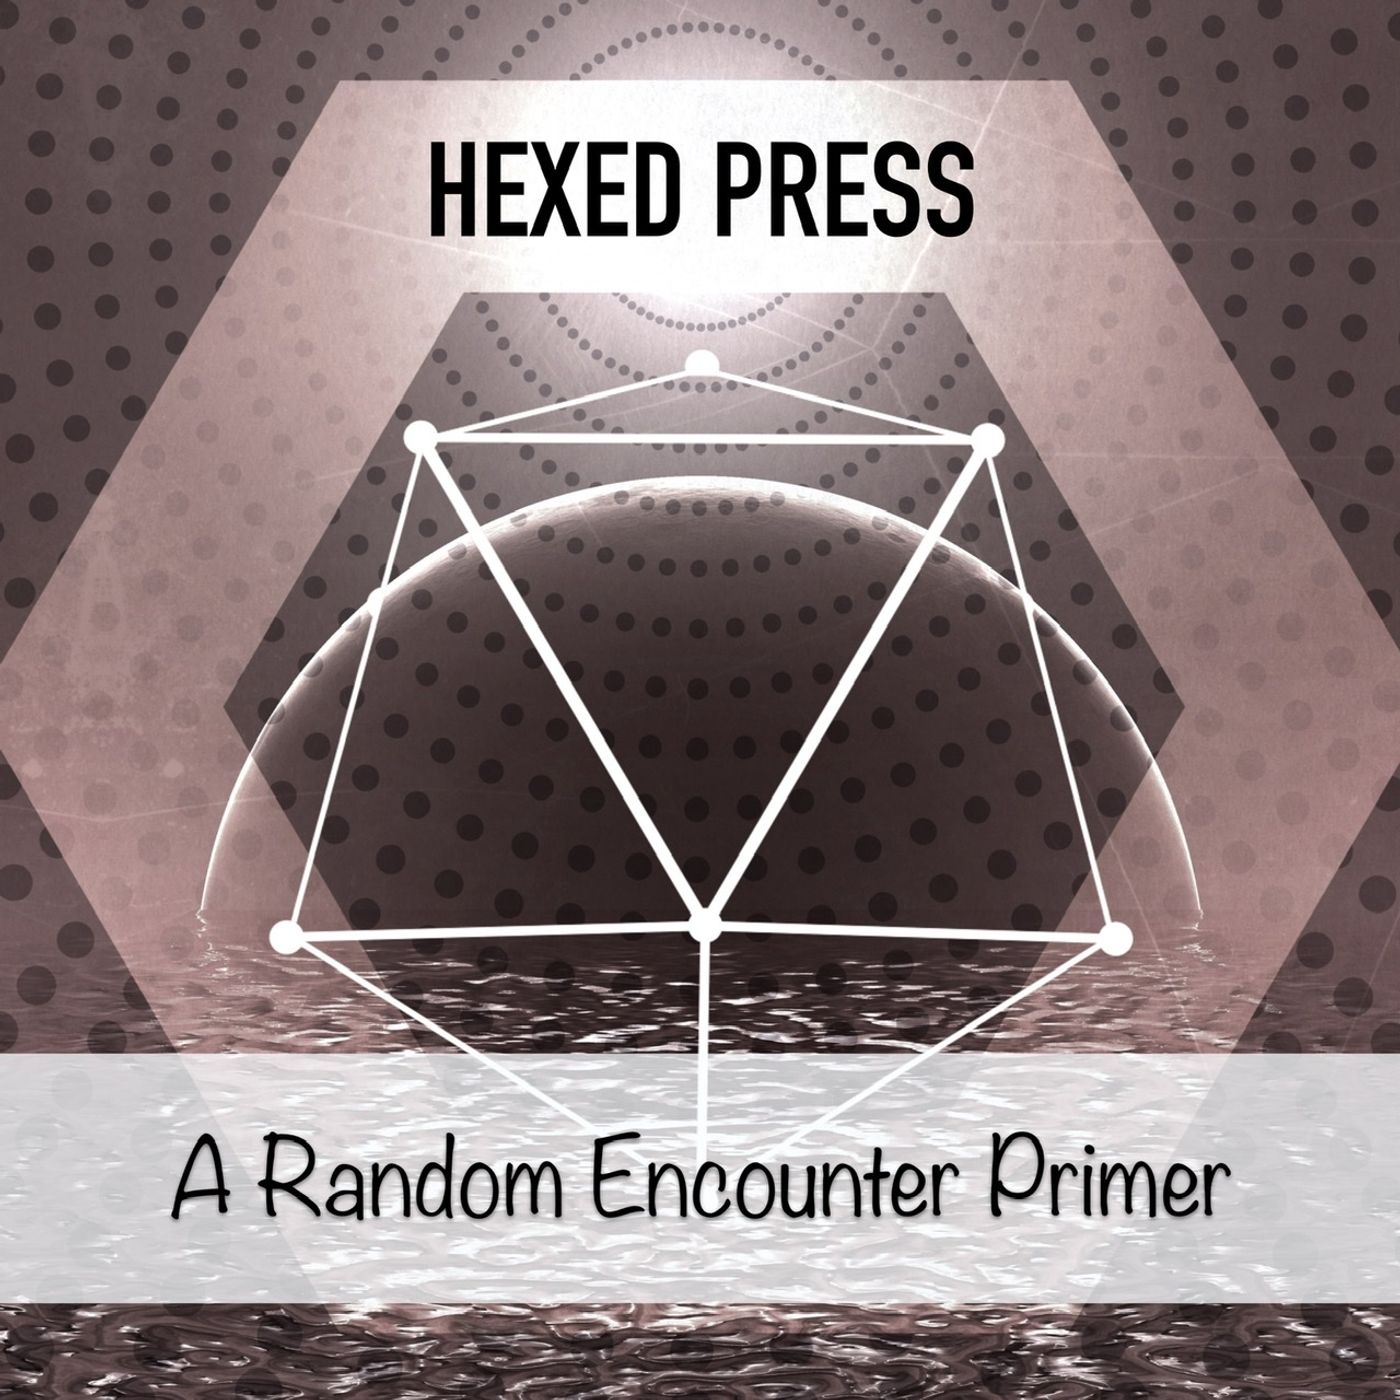 Hexed Press Live! A Random Encounter Primer